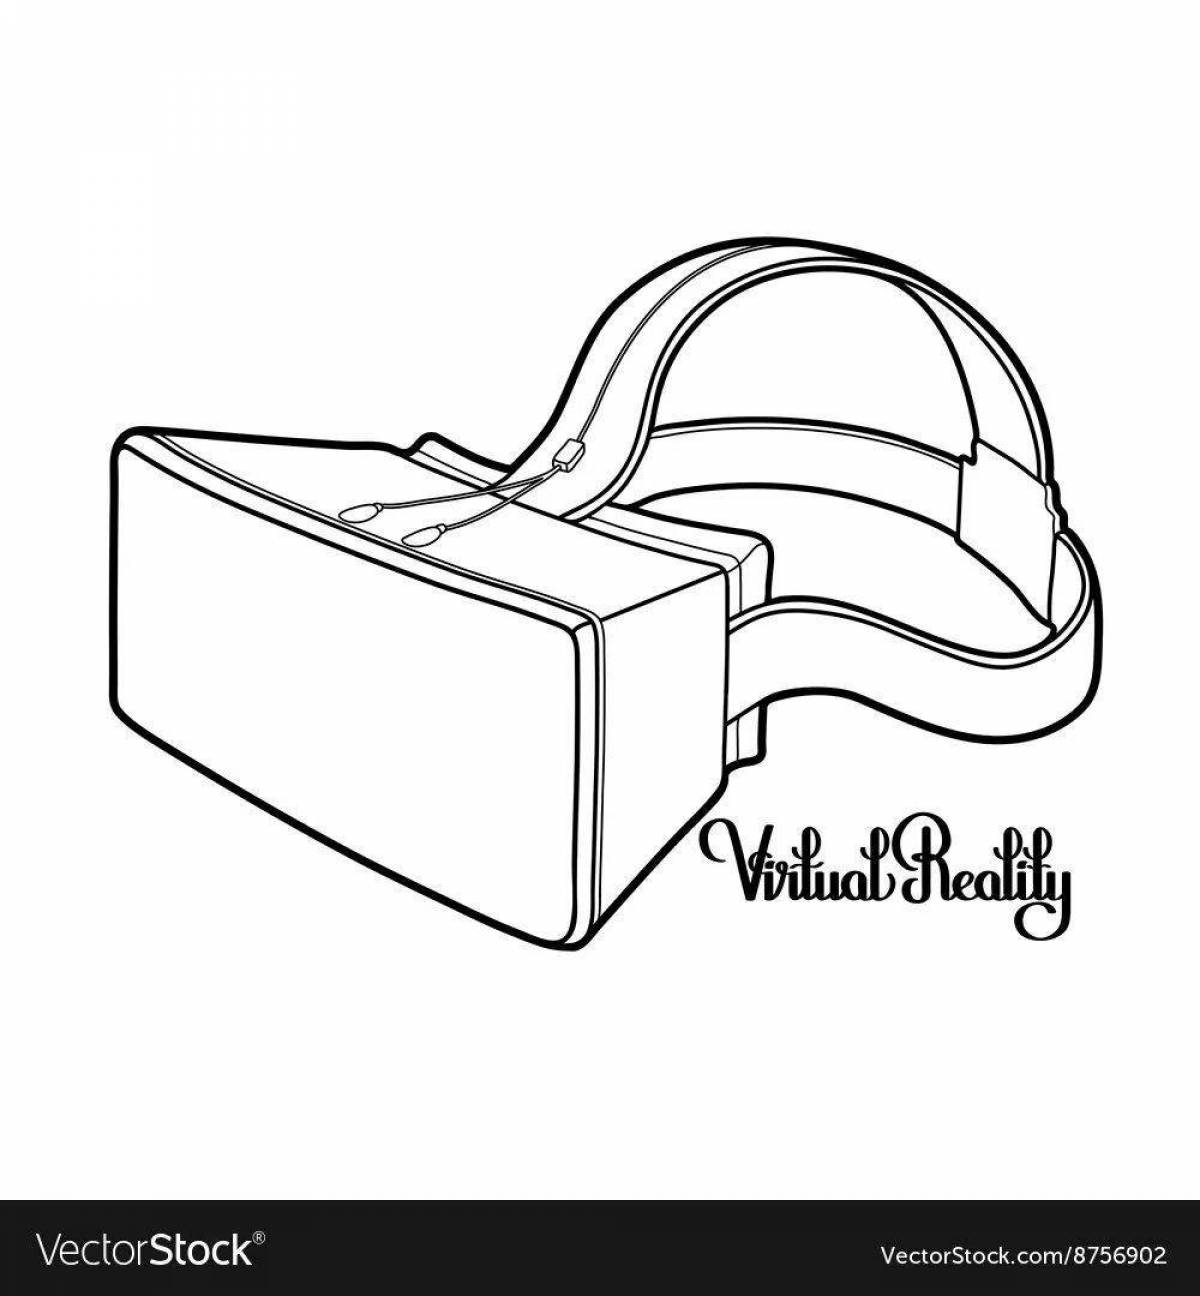 Virtual reality #1